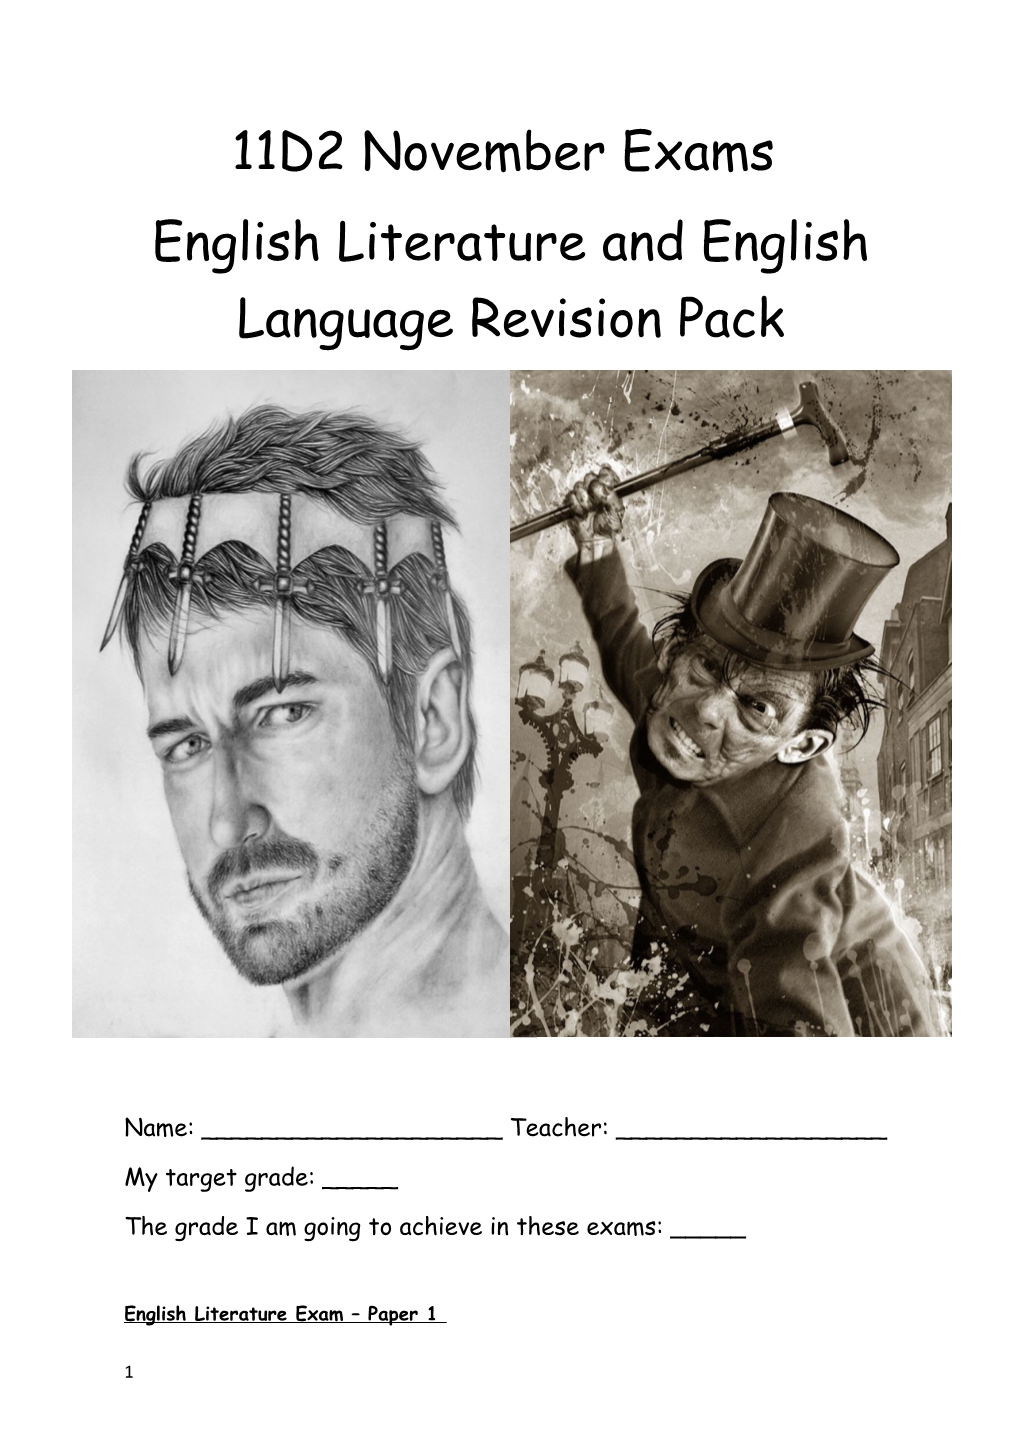 English Literature and English Language Revision Pack